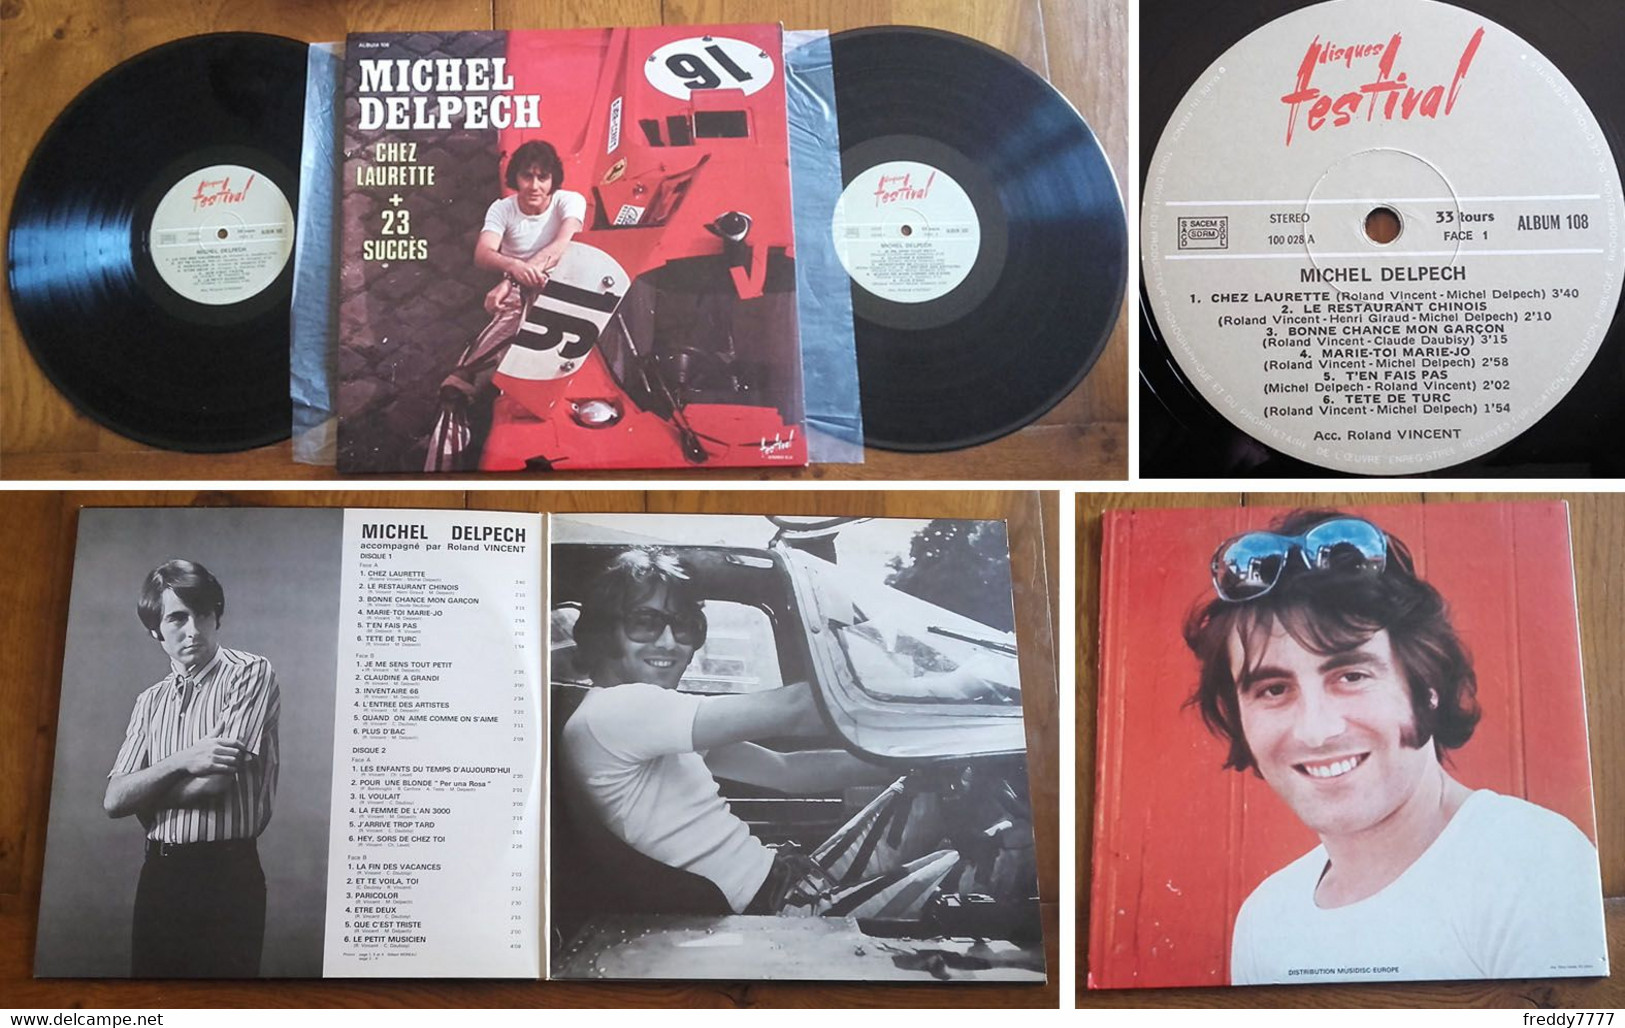 RARE French DOUBLE LP 33t RPM (12") MICHEL DELPECH (Gatefold P/s, 1974) - Collector's Editions